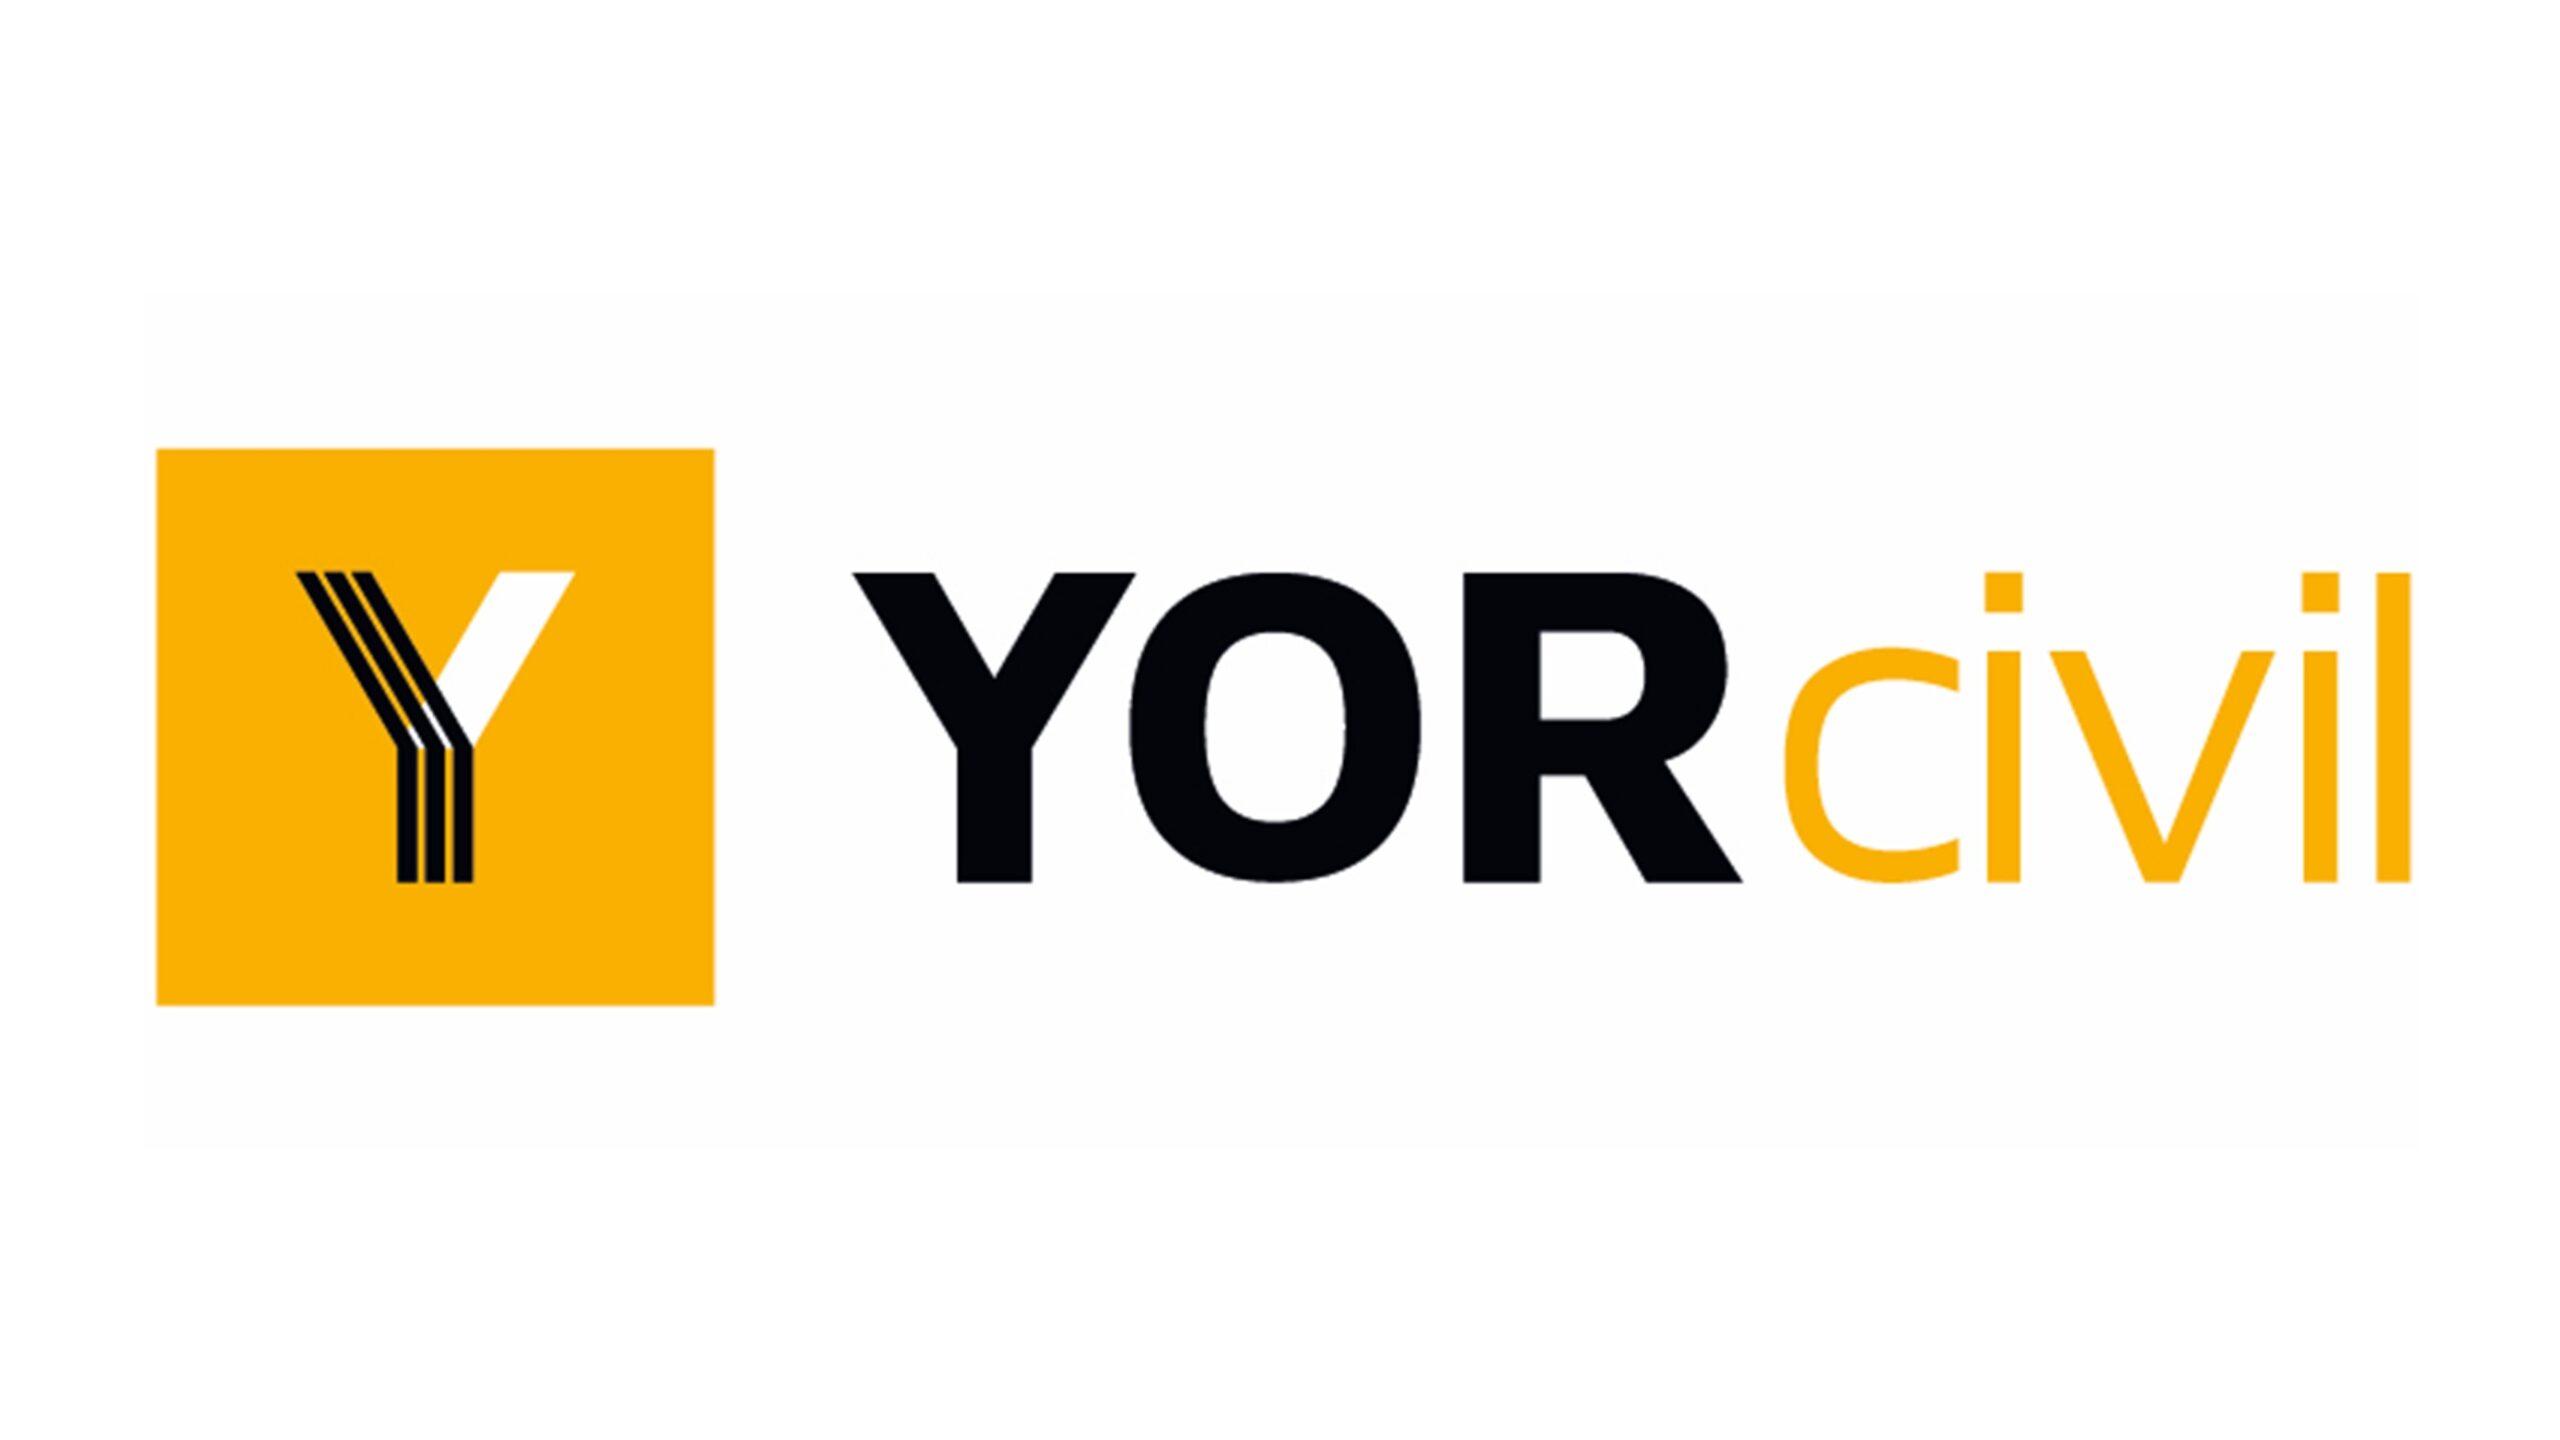 YORcivil framework launched